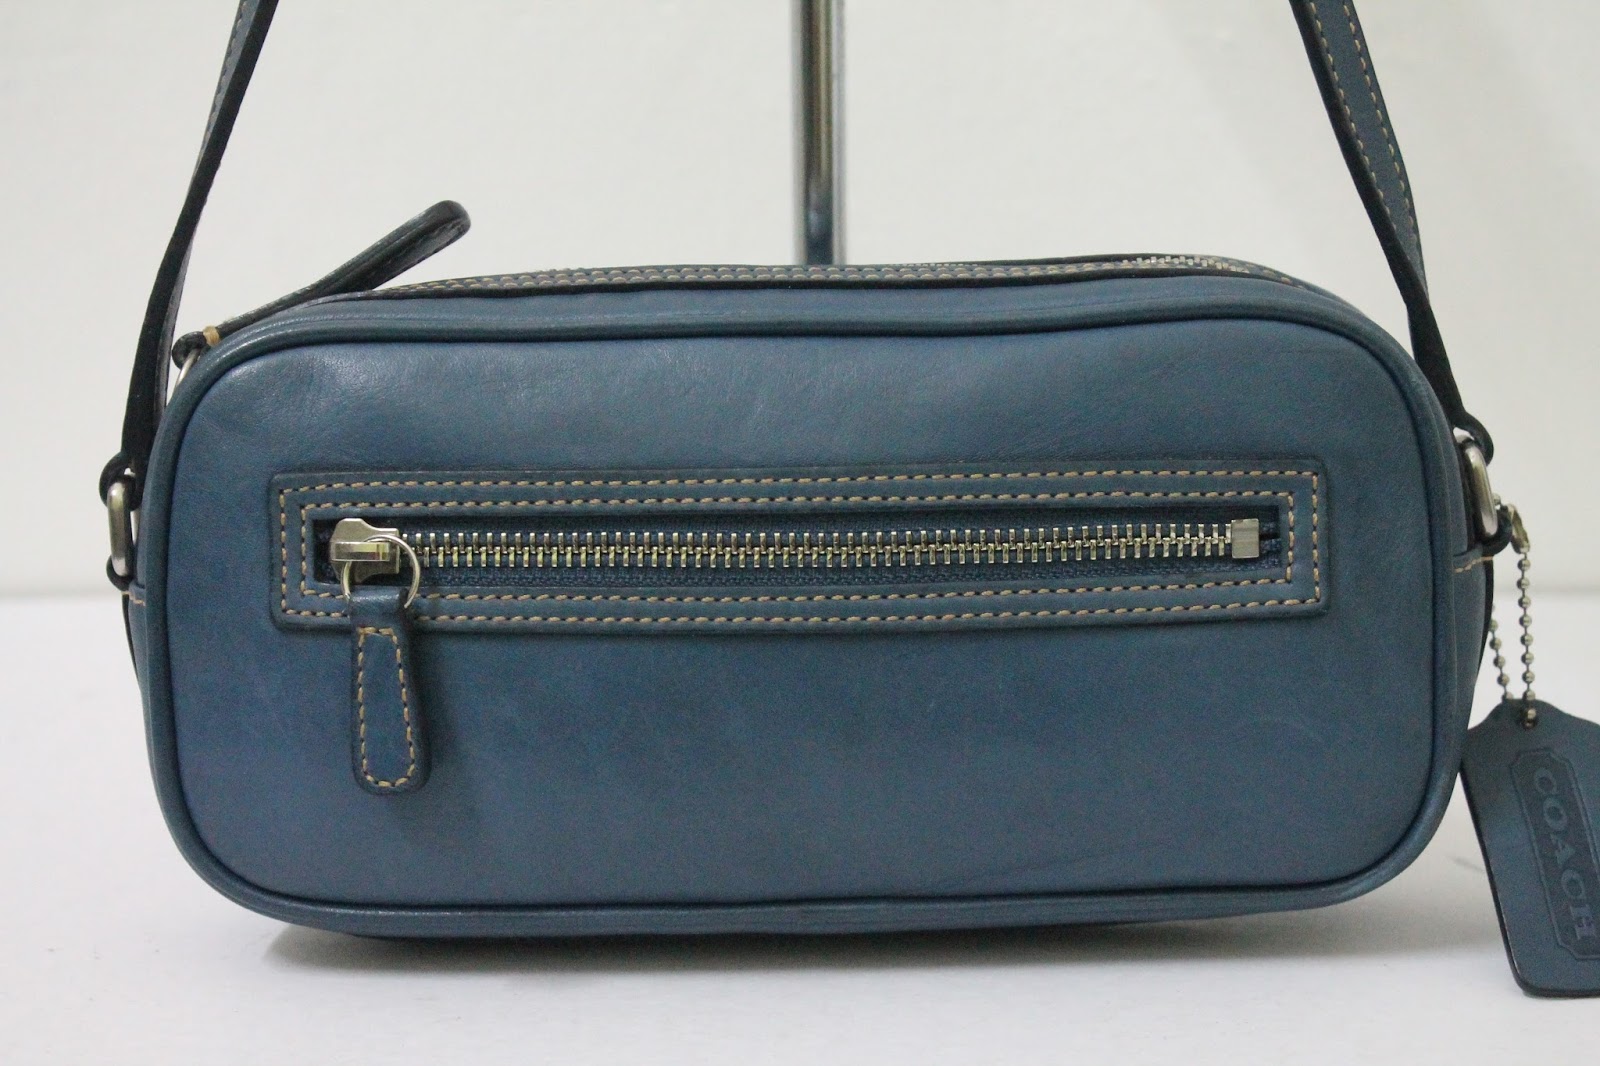 BUNDLEBARANGBAEK: Authentic COACH Leather Crossbody Bag. ( SOLD OUT )